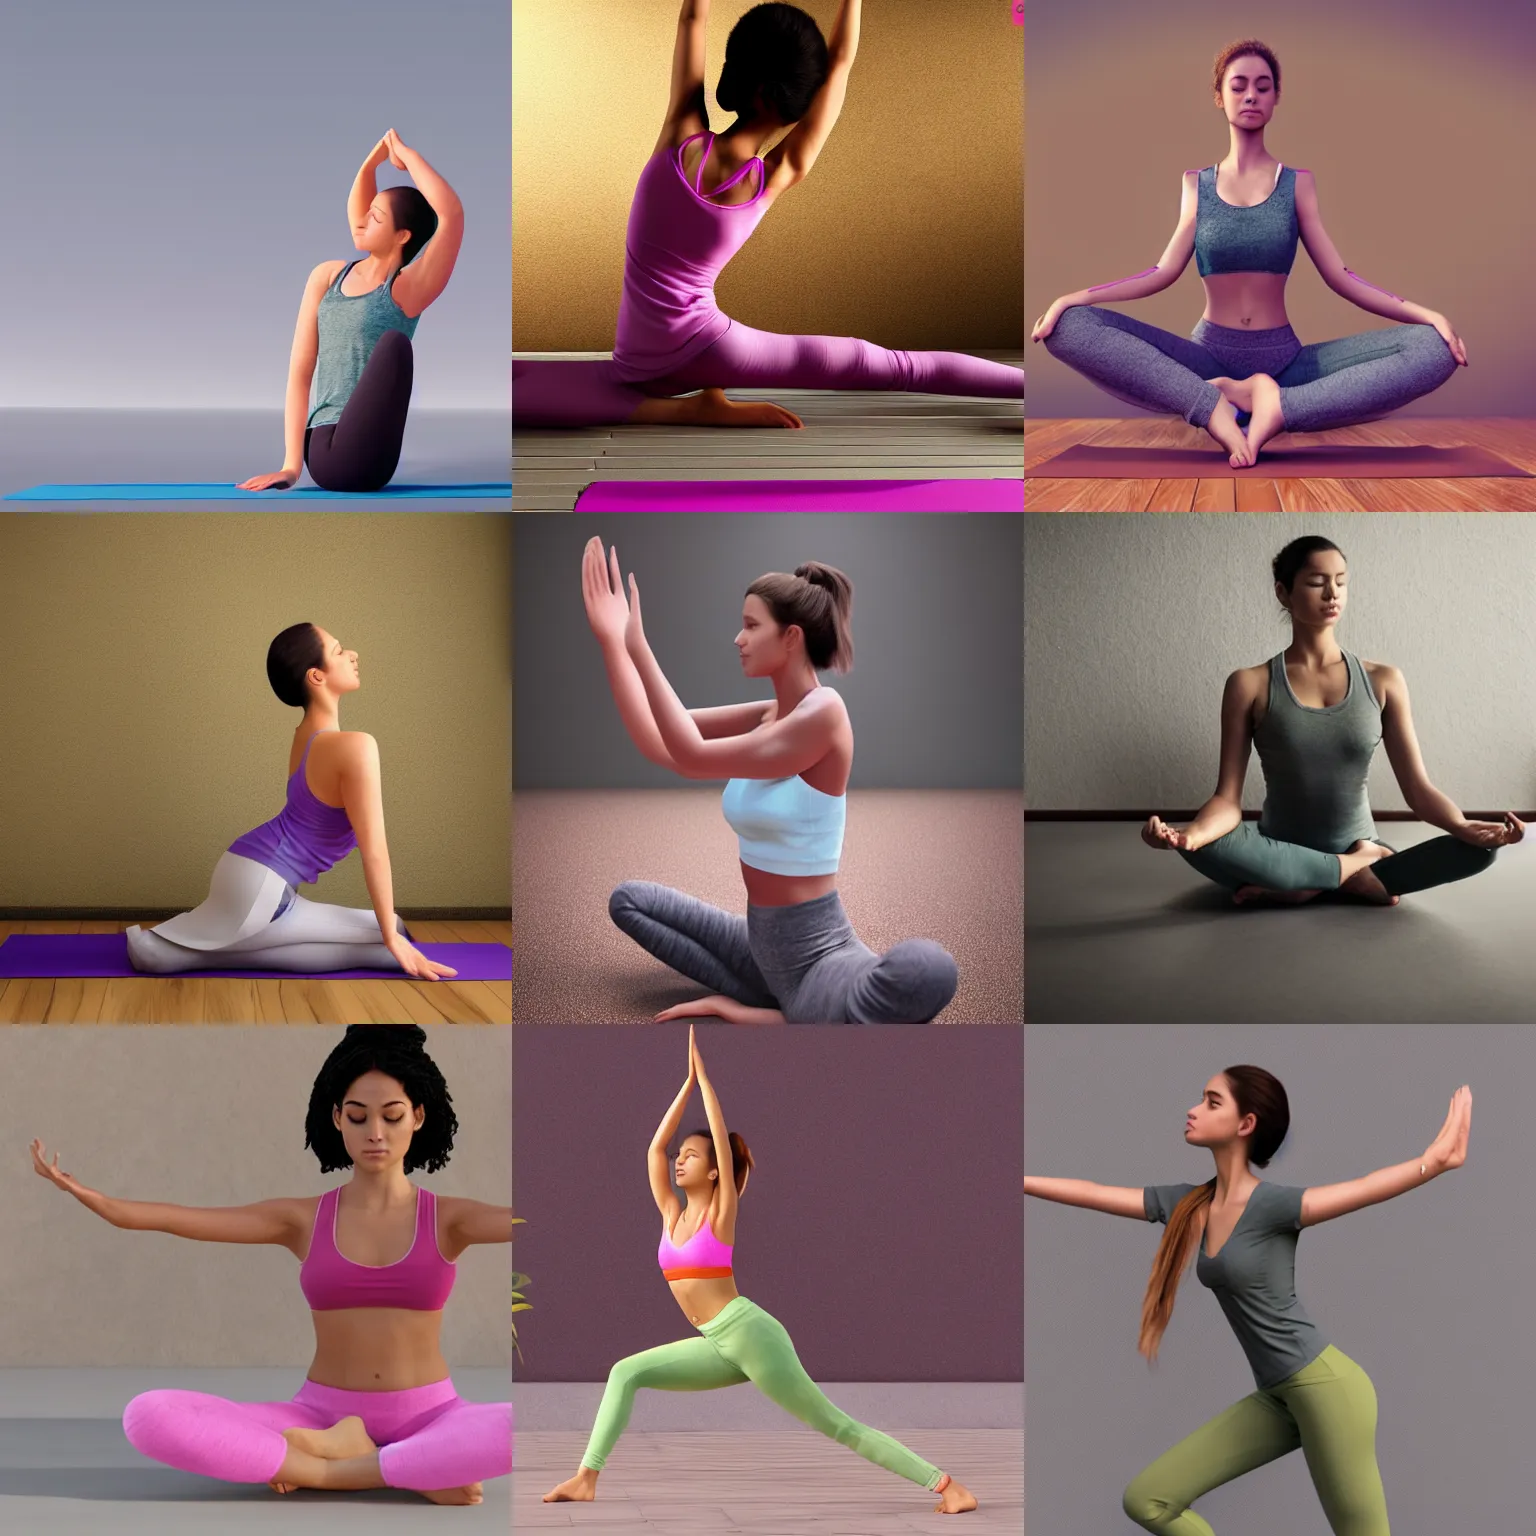 Explore New Territory in Side Bend Yoga Poses - YogaUOnline